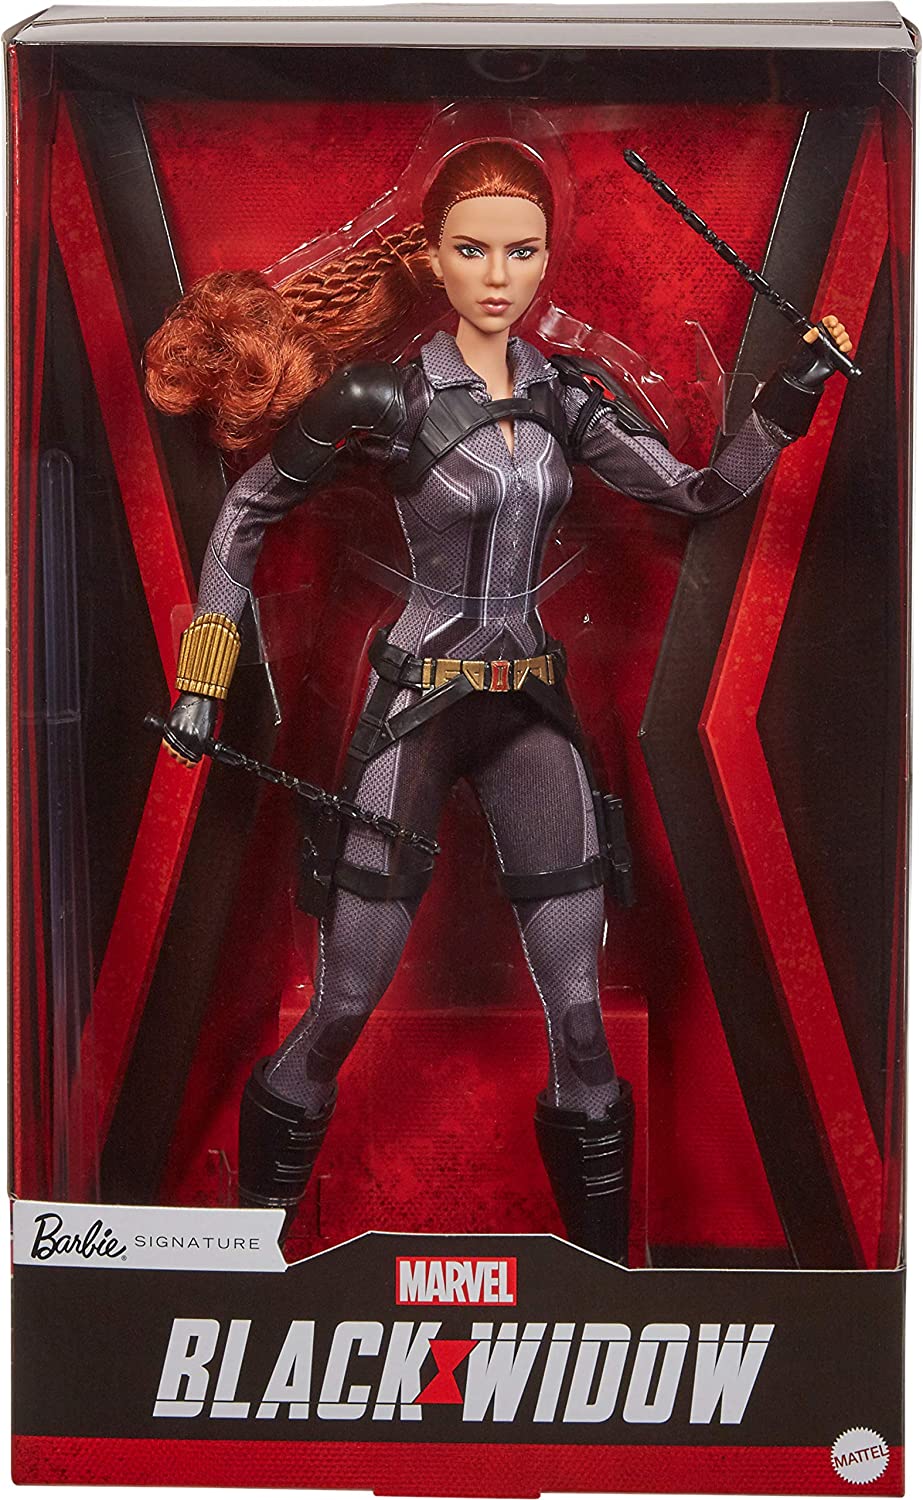 Barbie Black Widow Collector Doll 2020 in black suit is